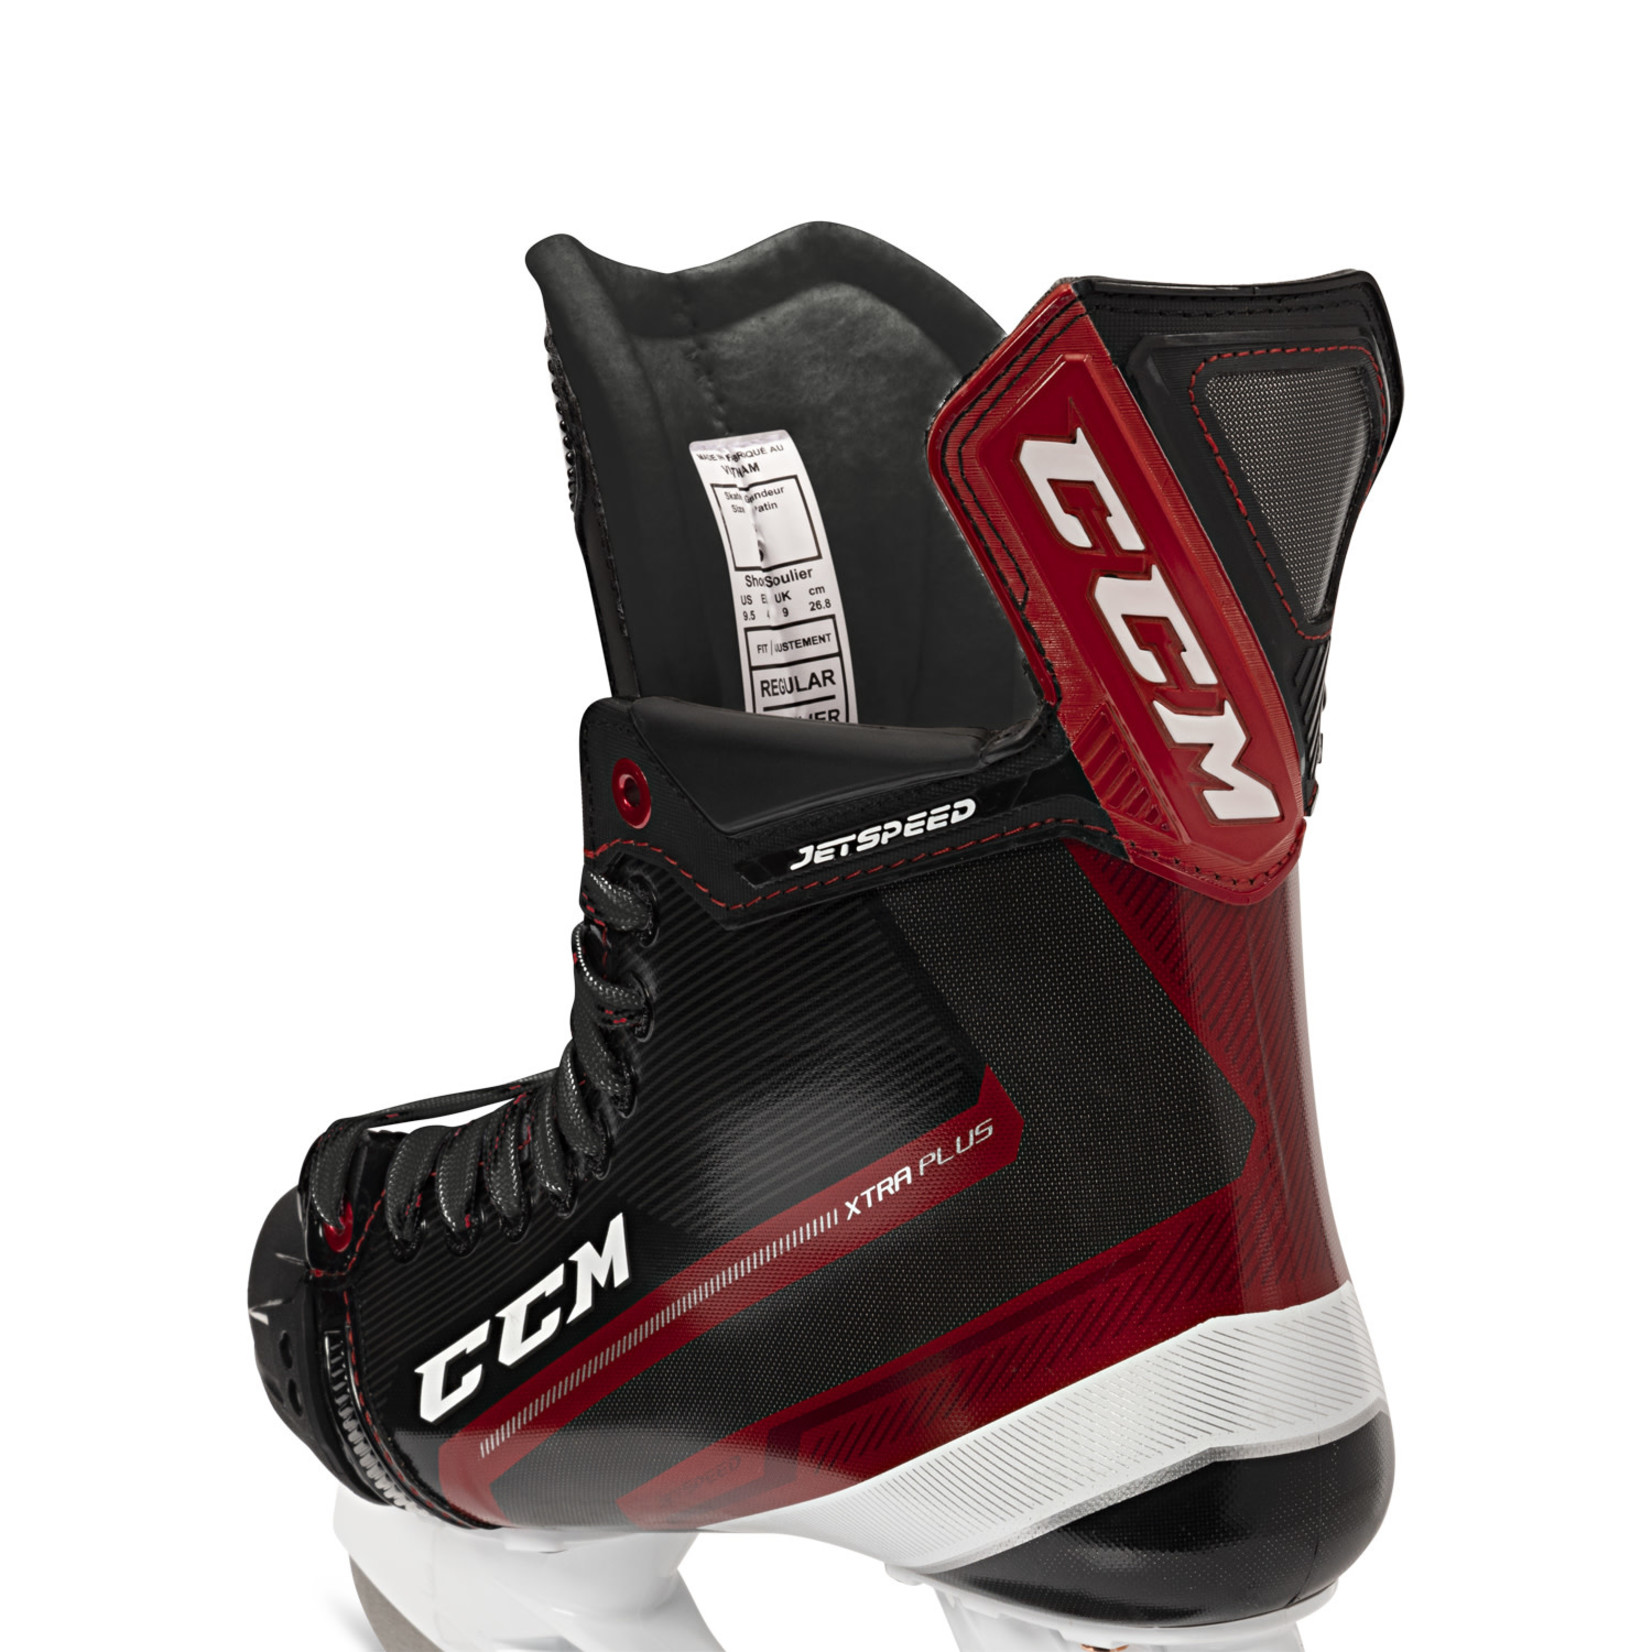 CCM CCM Hockey Skates, Jetspeed Xtra Plus, Senior